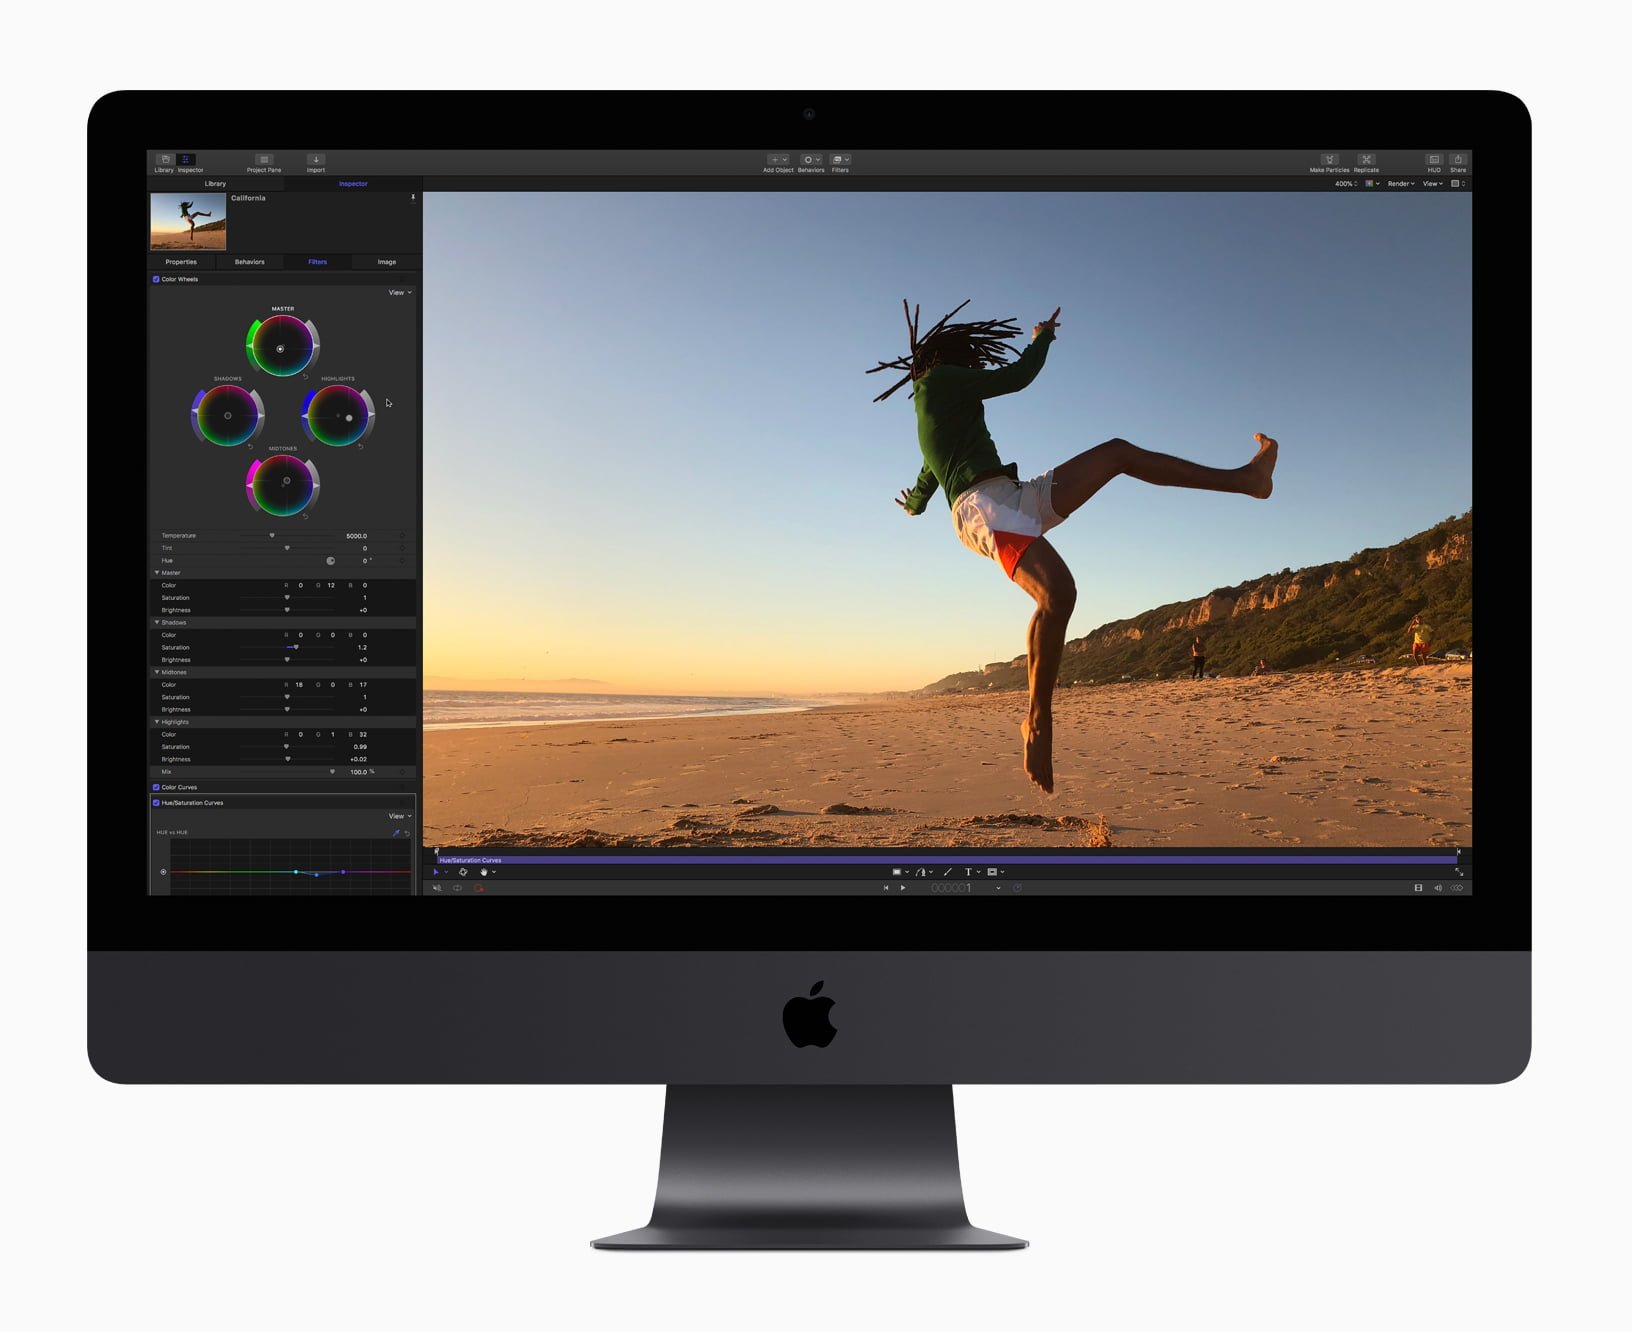 Apple final cut pro x 10.2.3 for mac